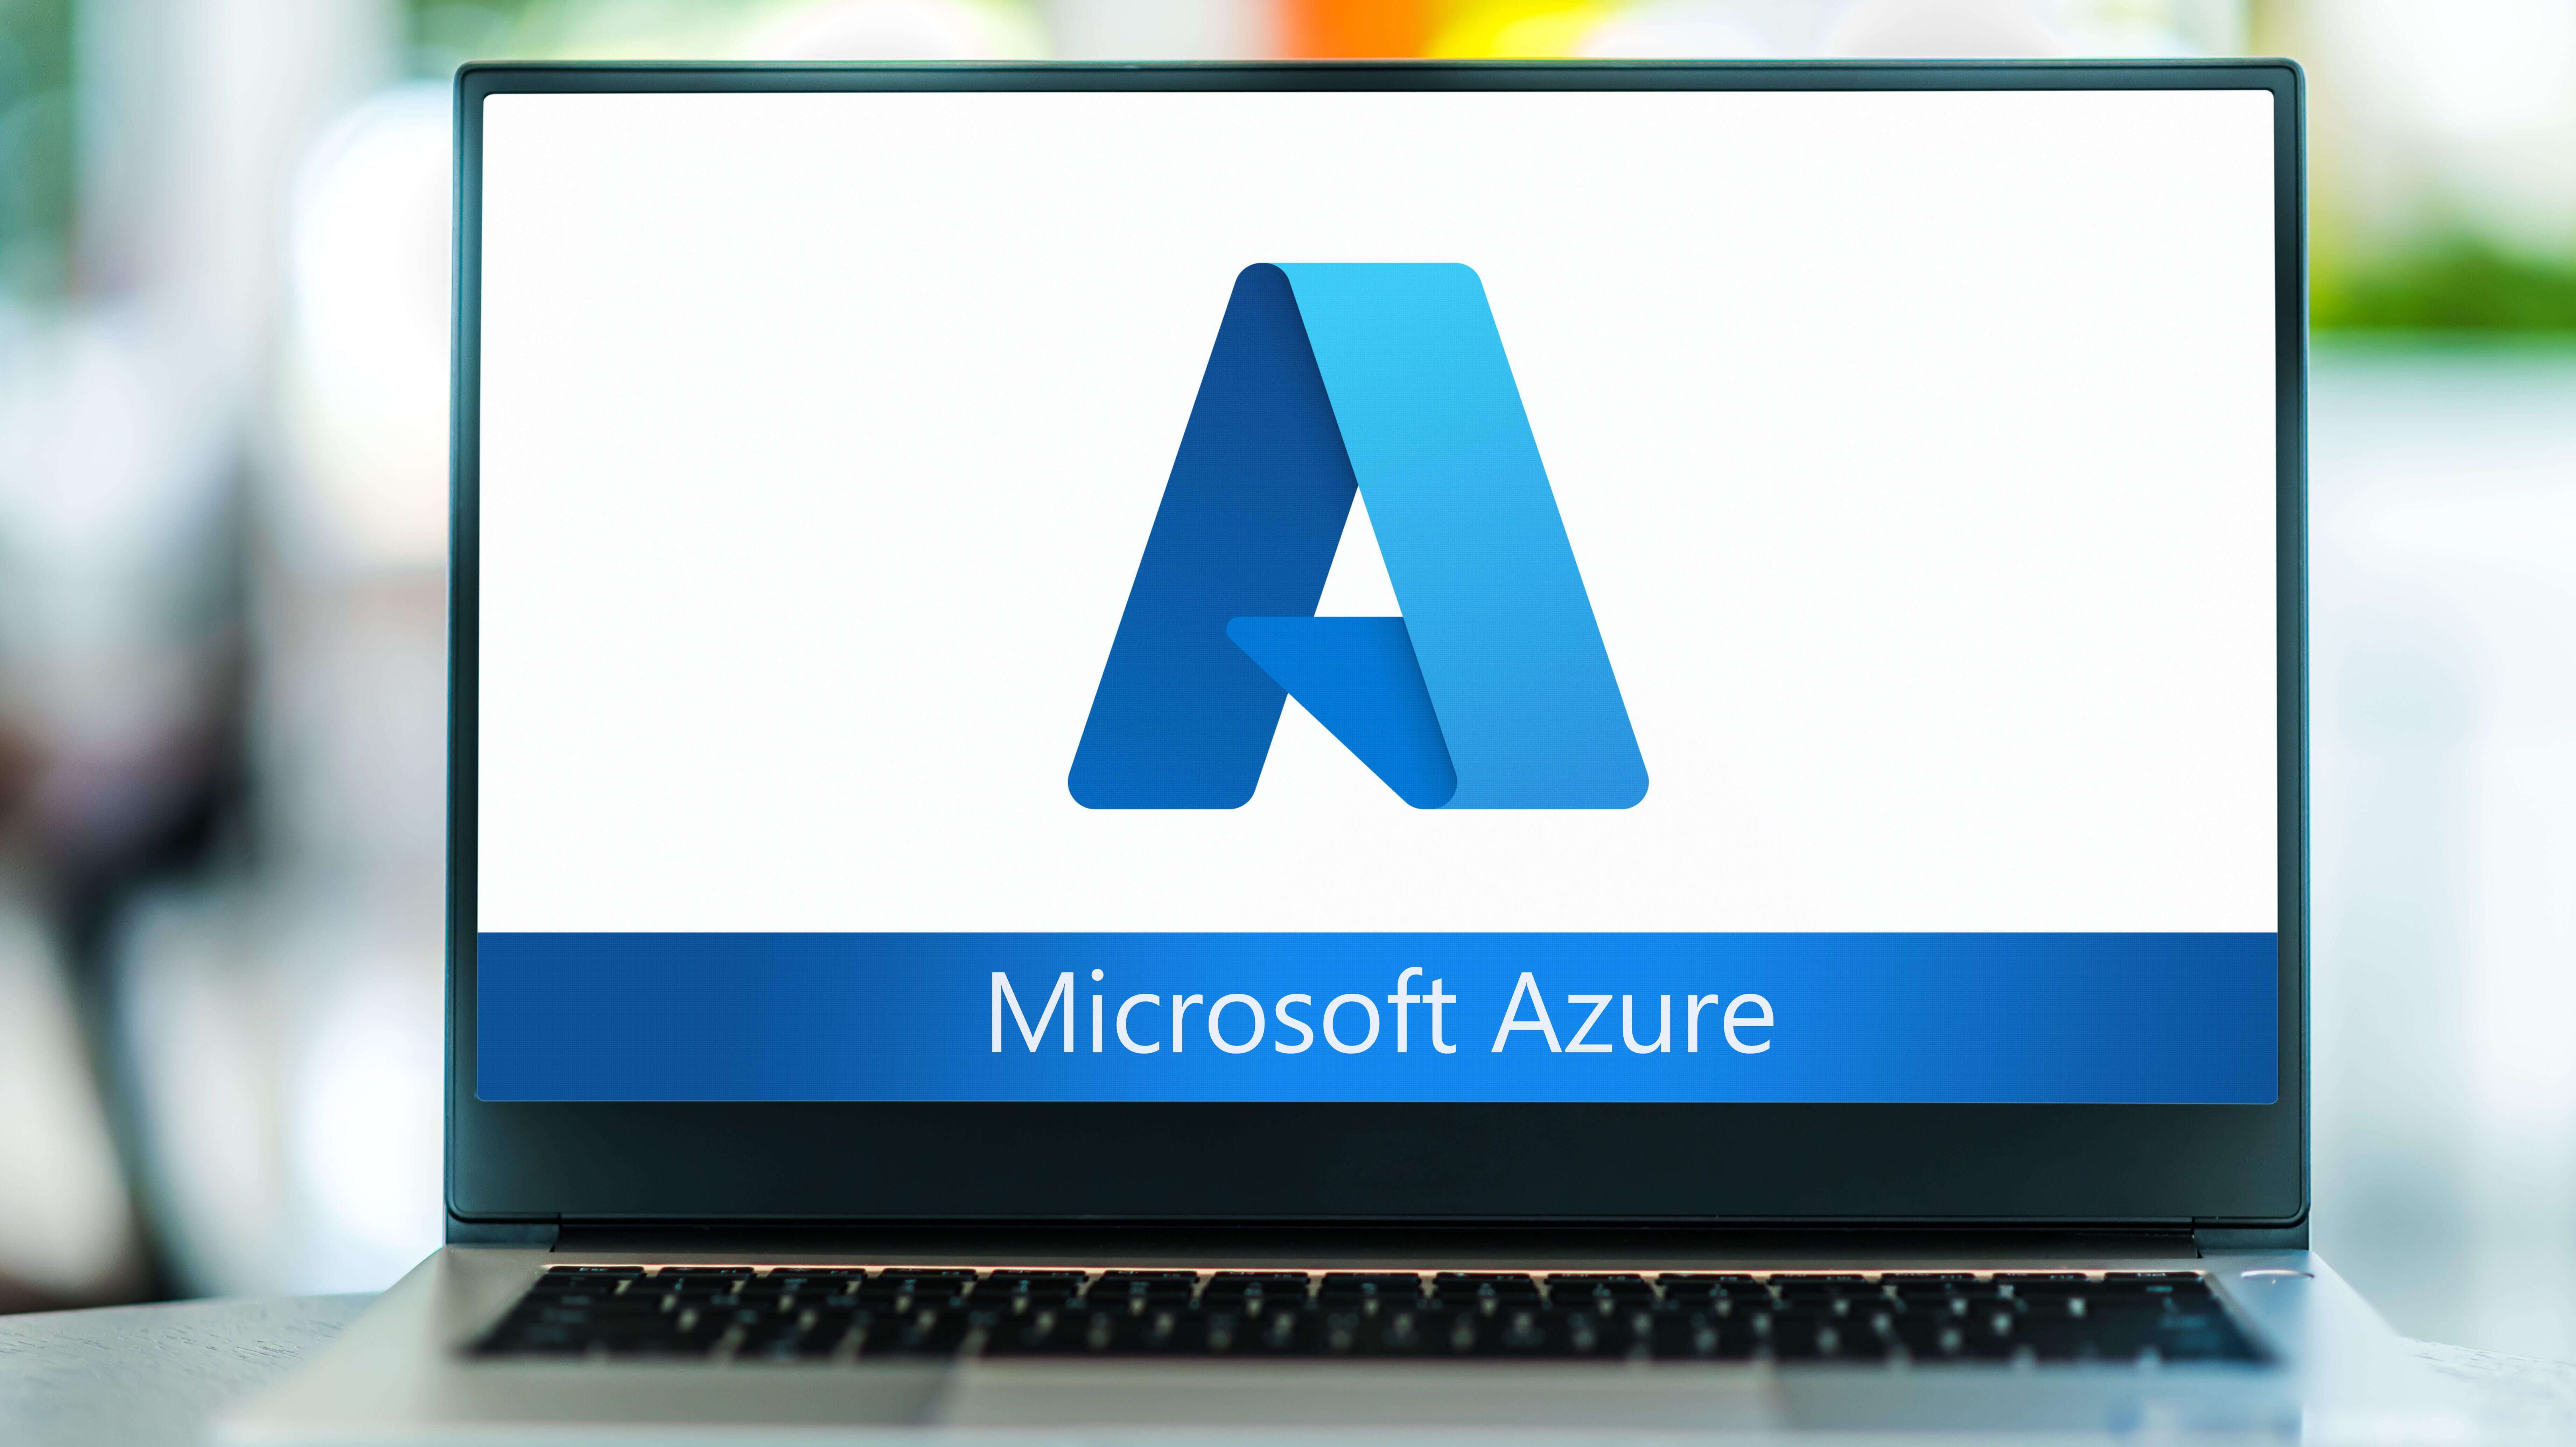 Microsoft Azure HDInsight Bugs Expose Big Data to Breaches